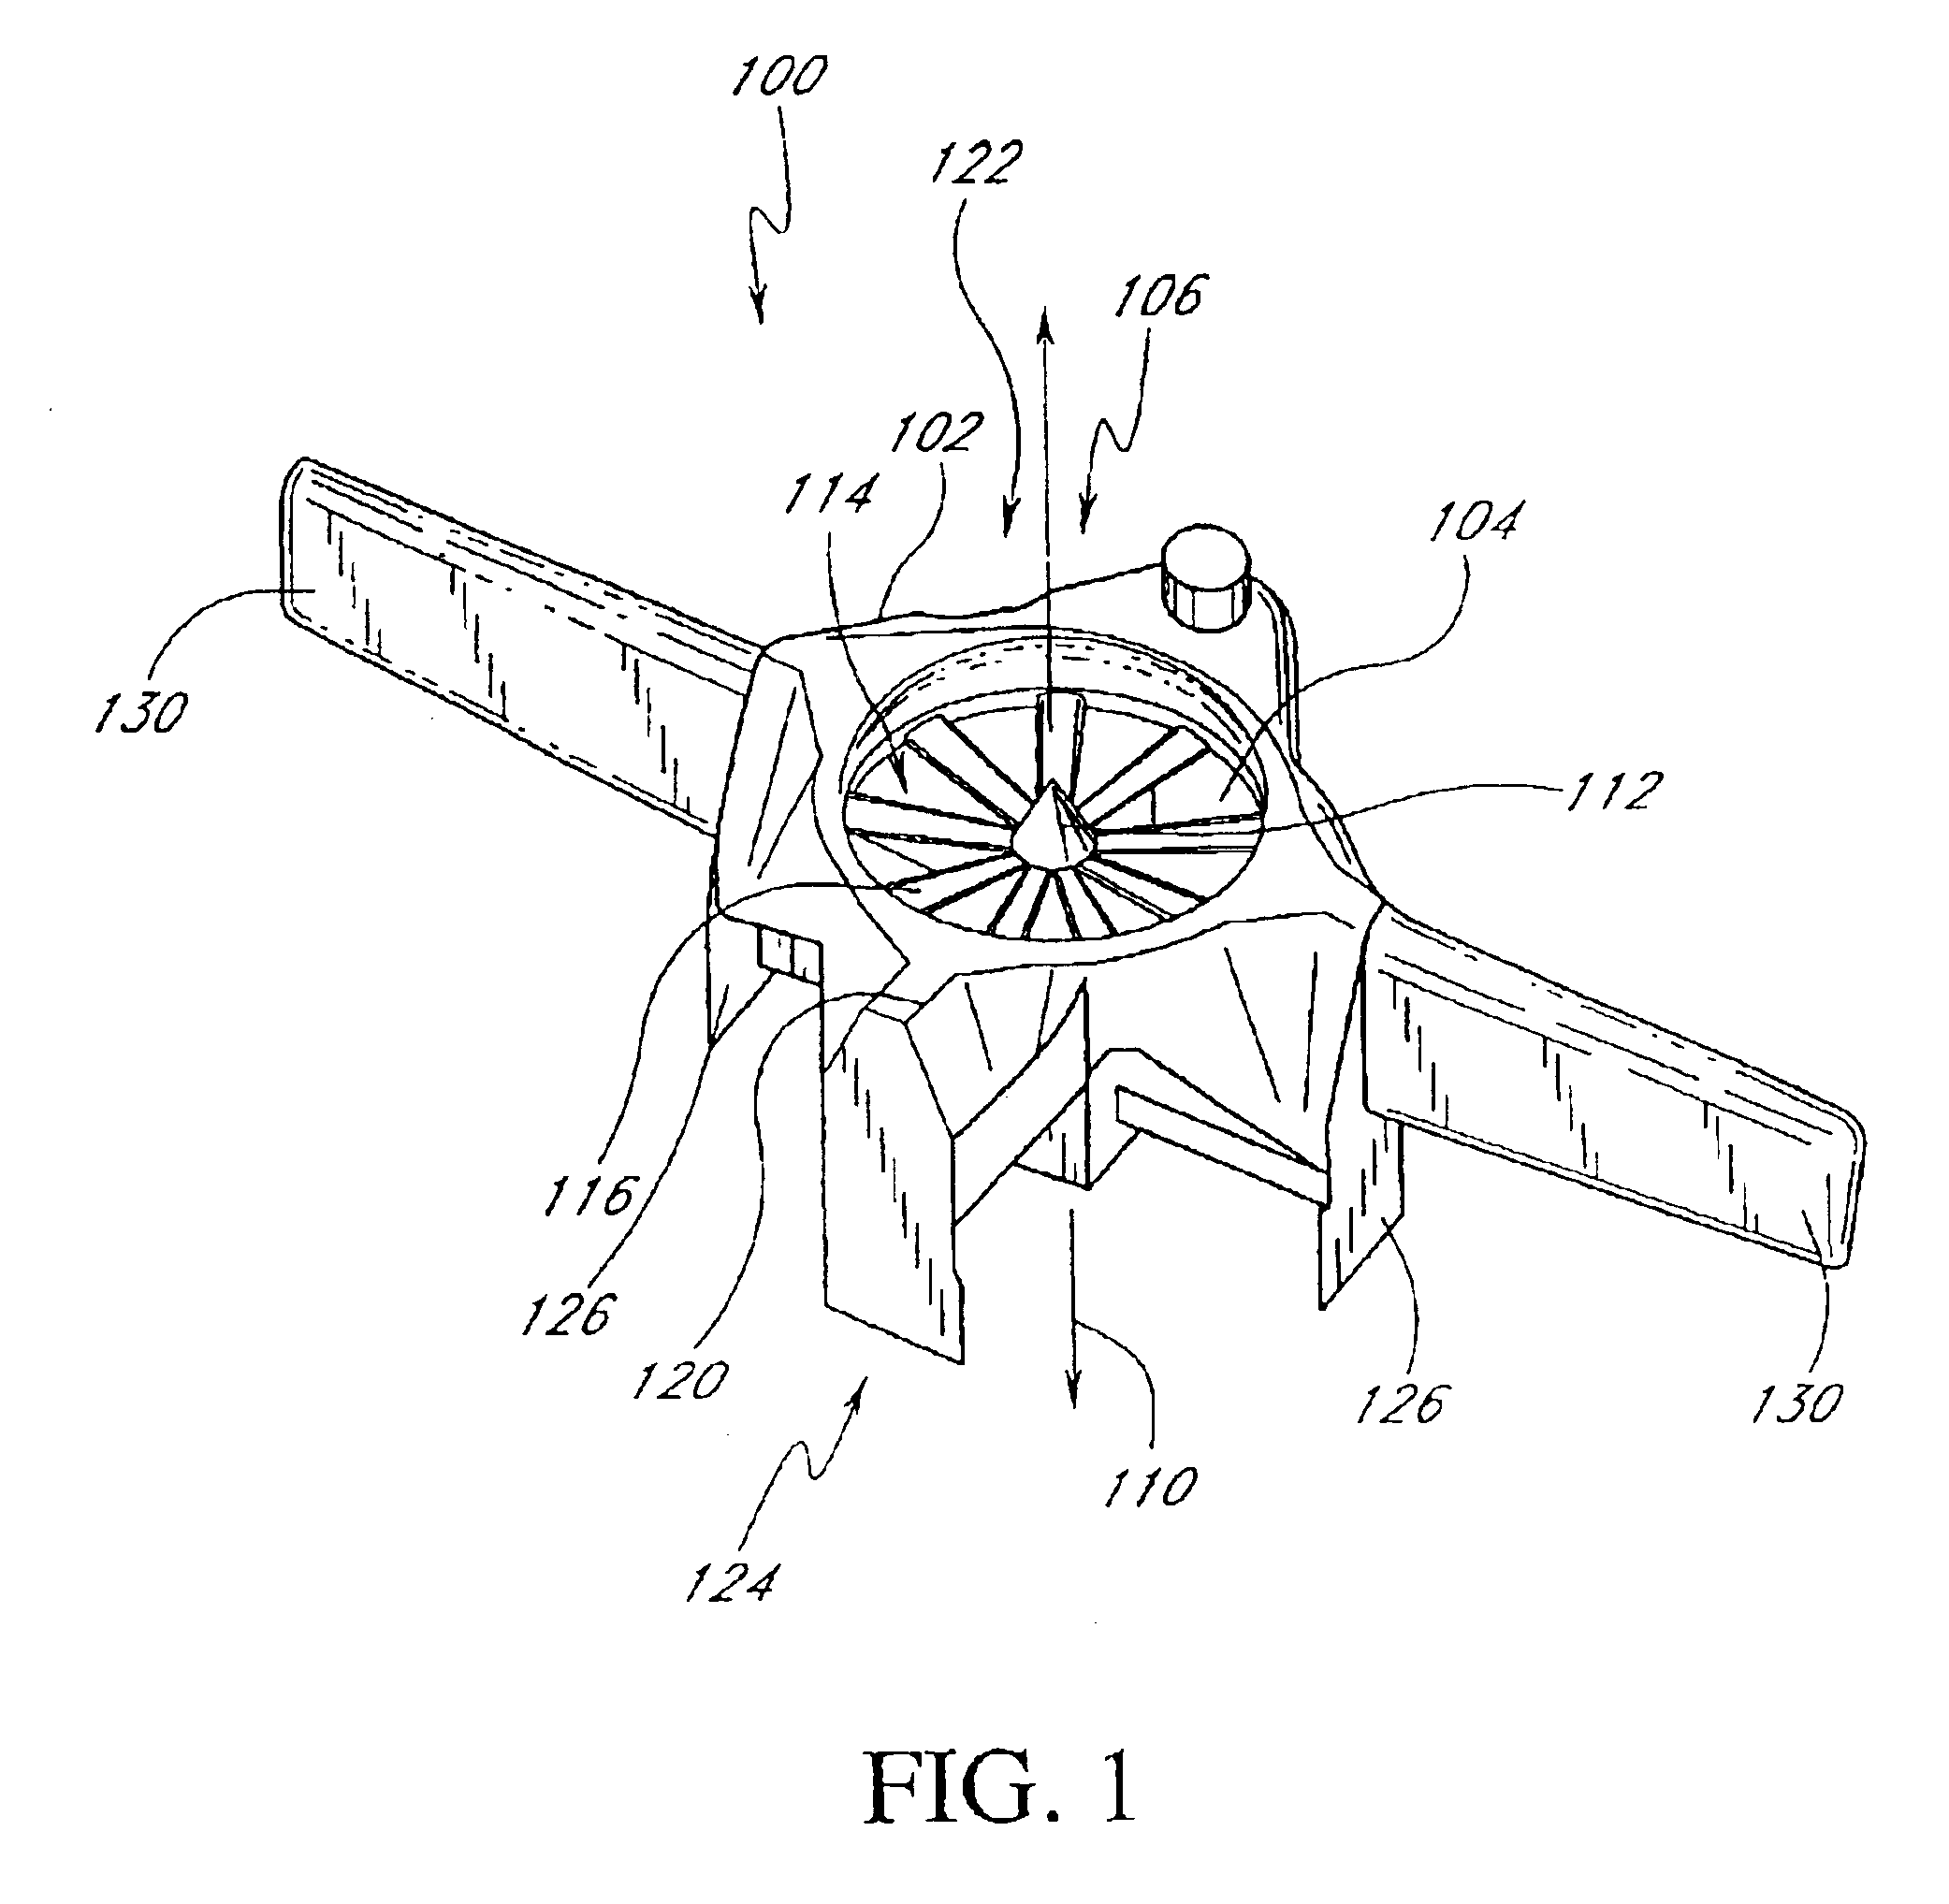 Gyrostabilized self propelled aircraft